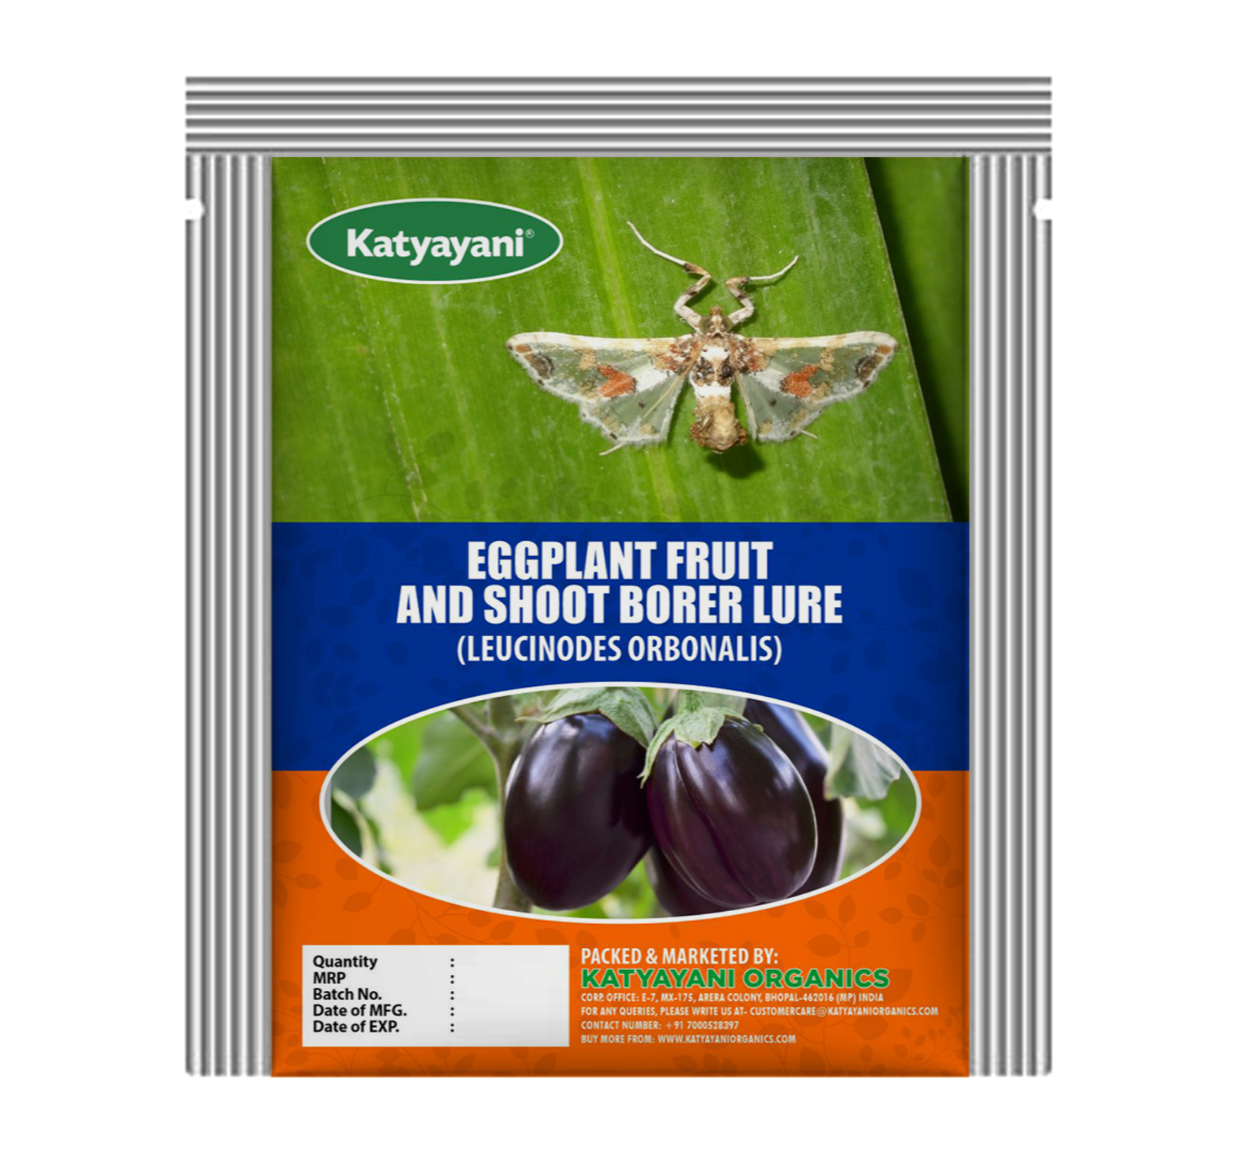 Eggplant Fruit & Shoot Borer Lure (LEUCINODES ORBONALIS)